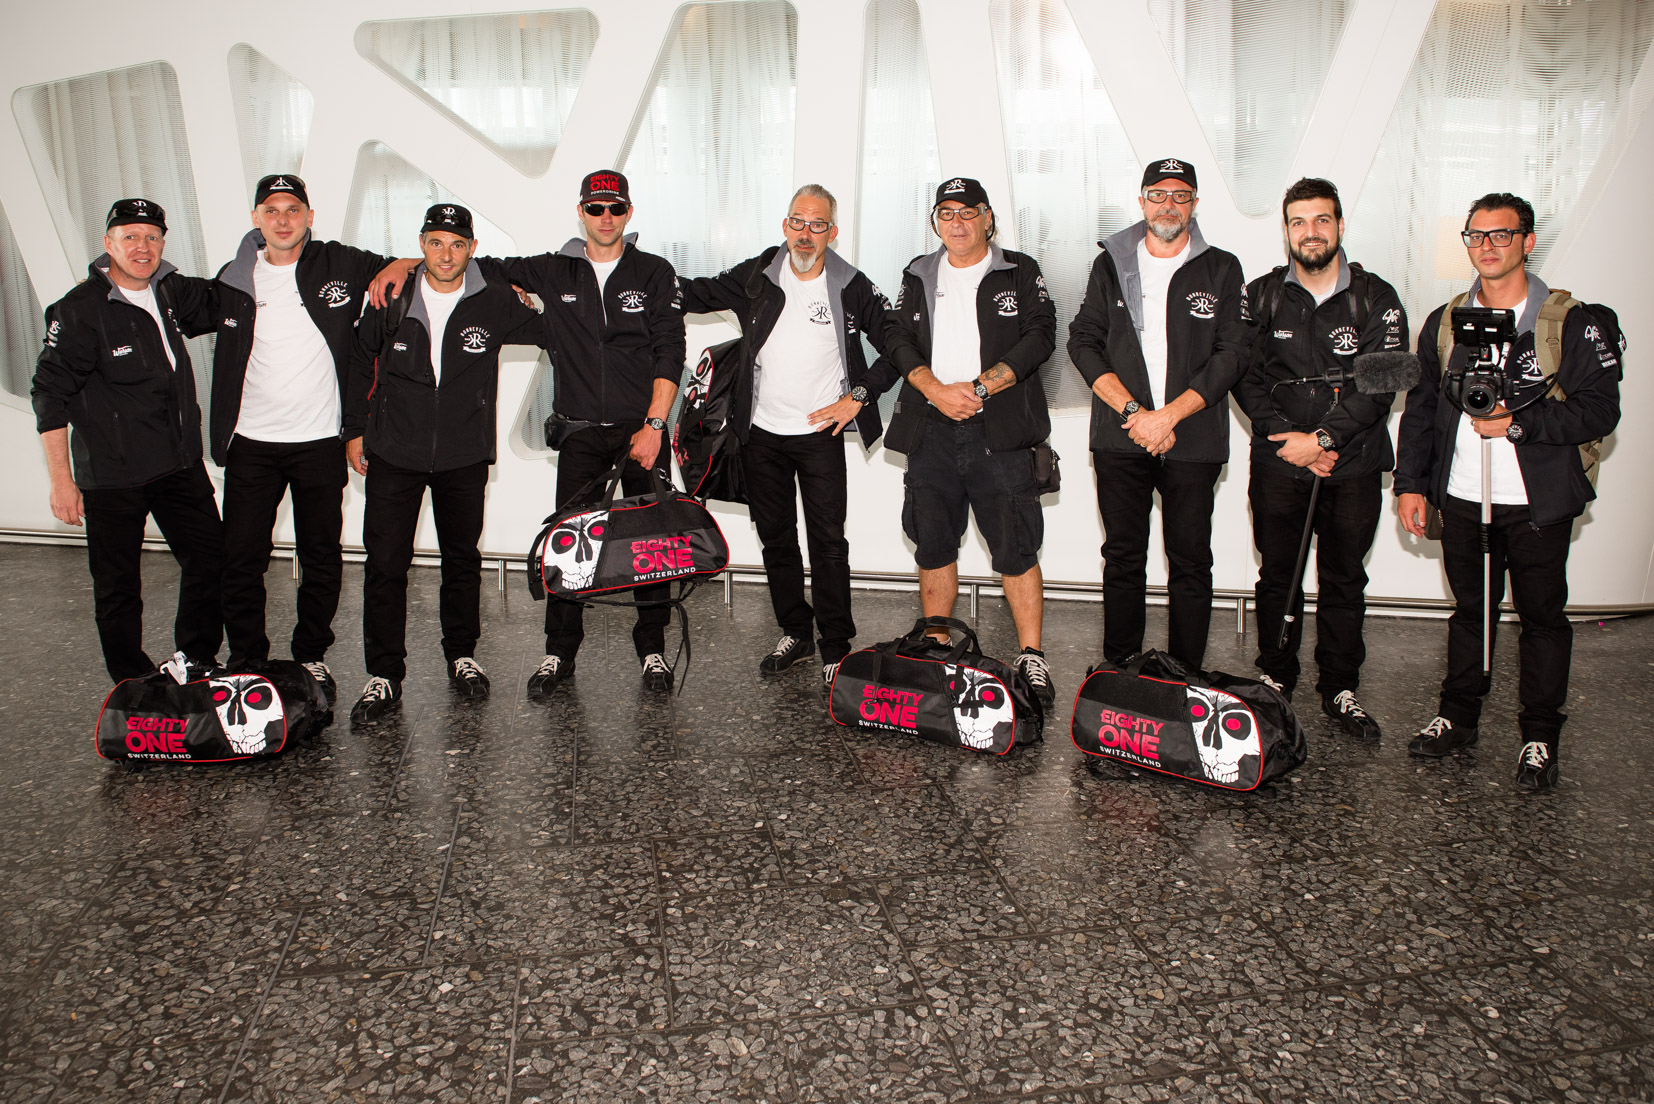 23.08.2017: KR-Raceteam fully assembles at Zurich airport